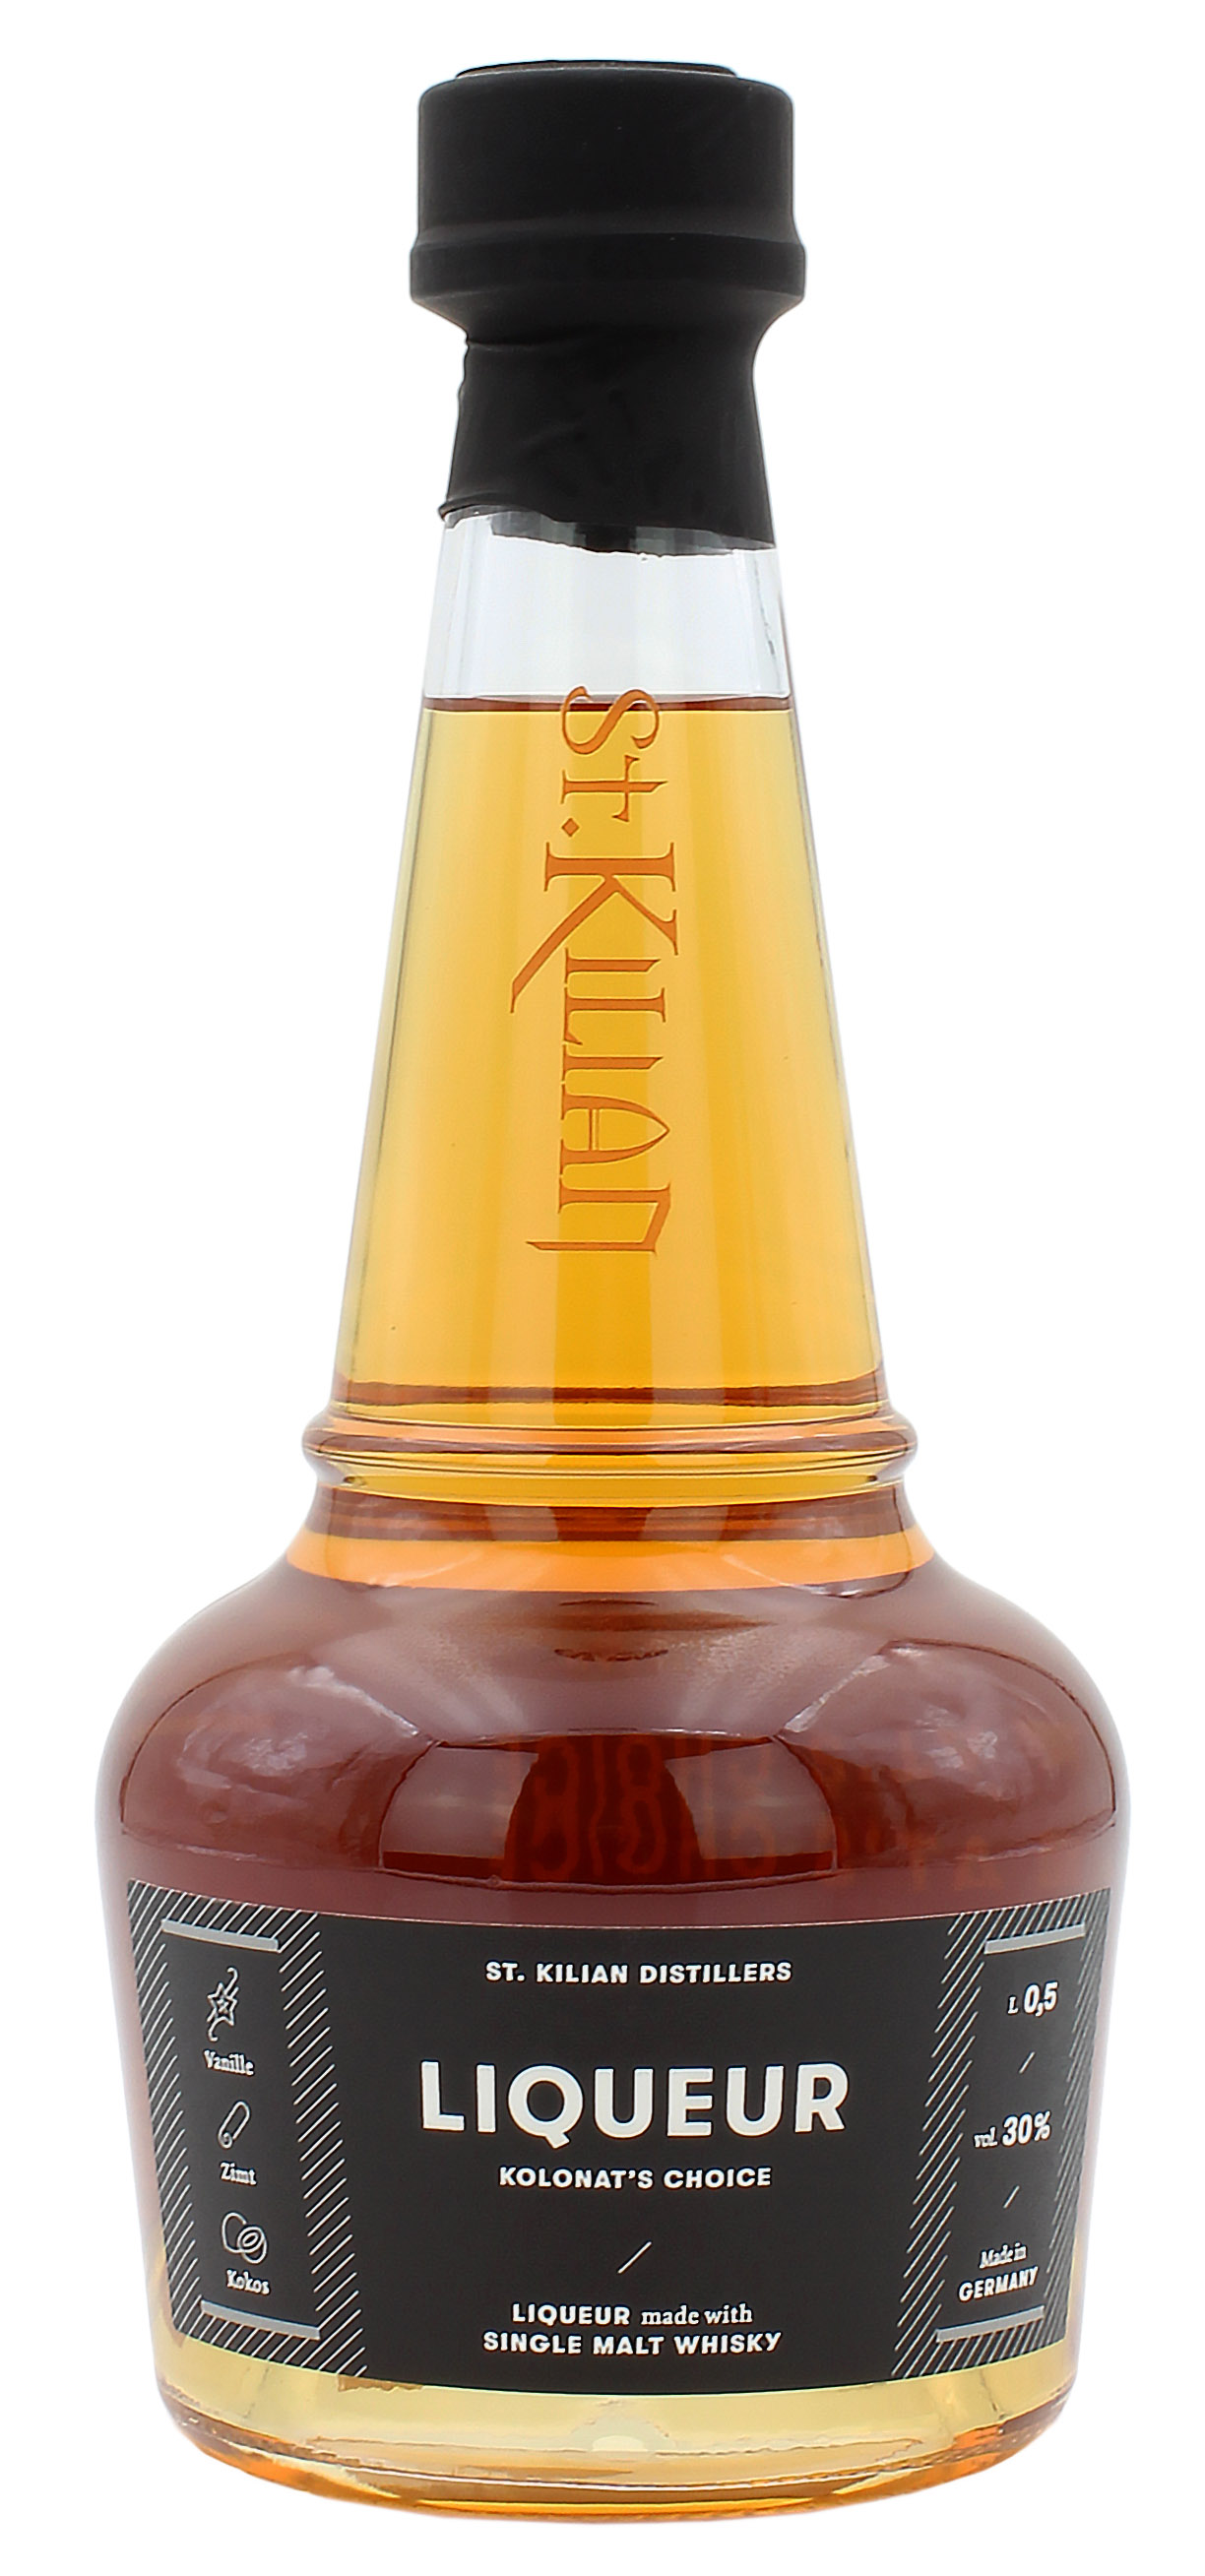 St. Kilian Whisky Likör Kolonat's Choice 30.0% 0,5l